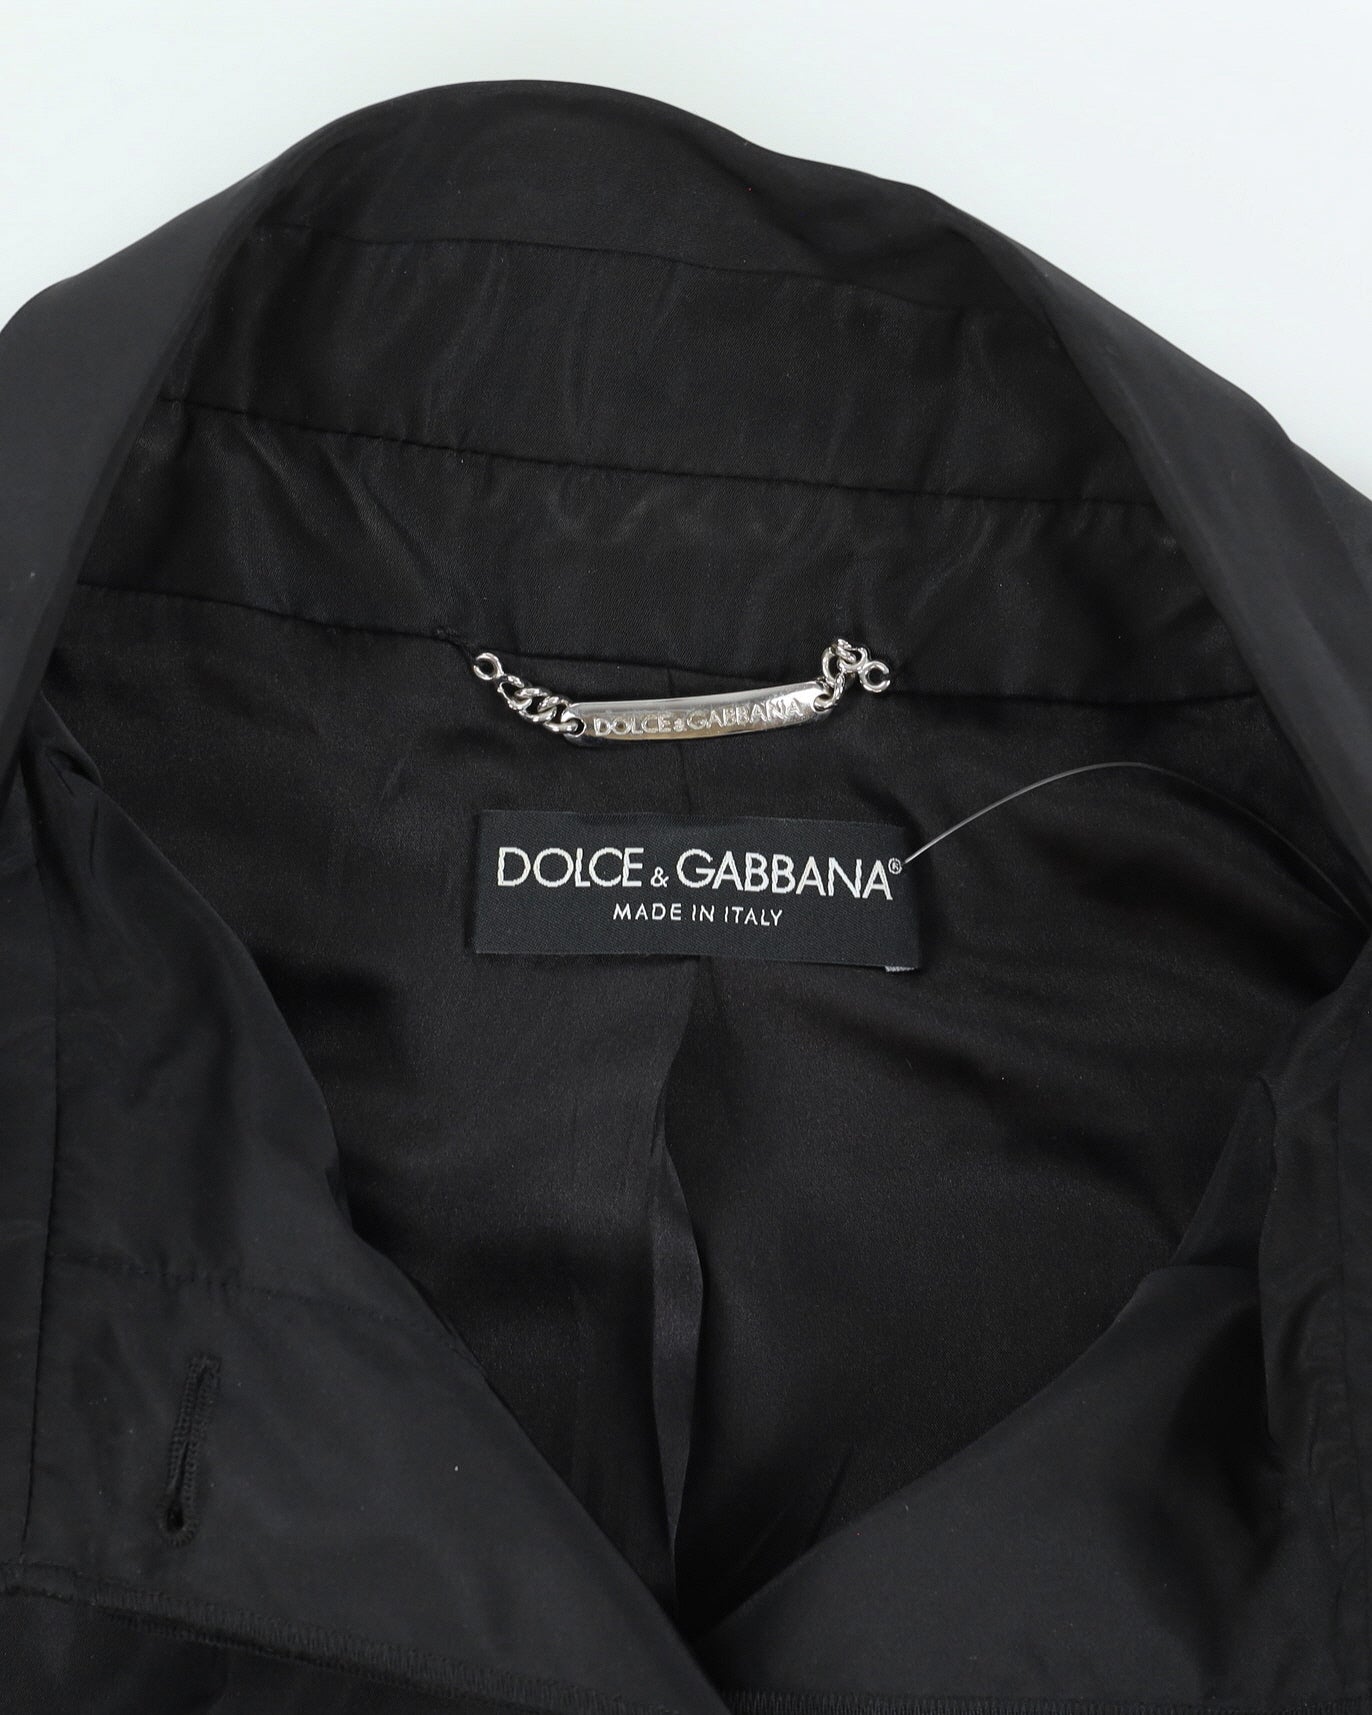 Dolce & Gabbana Black Jacket - M